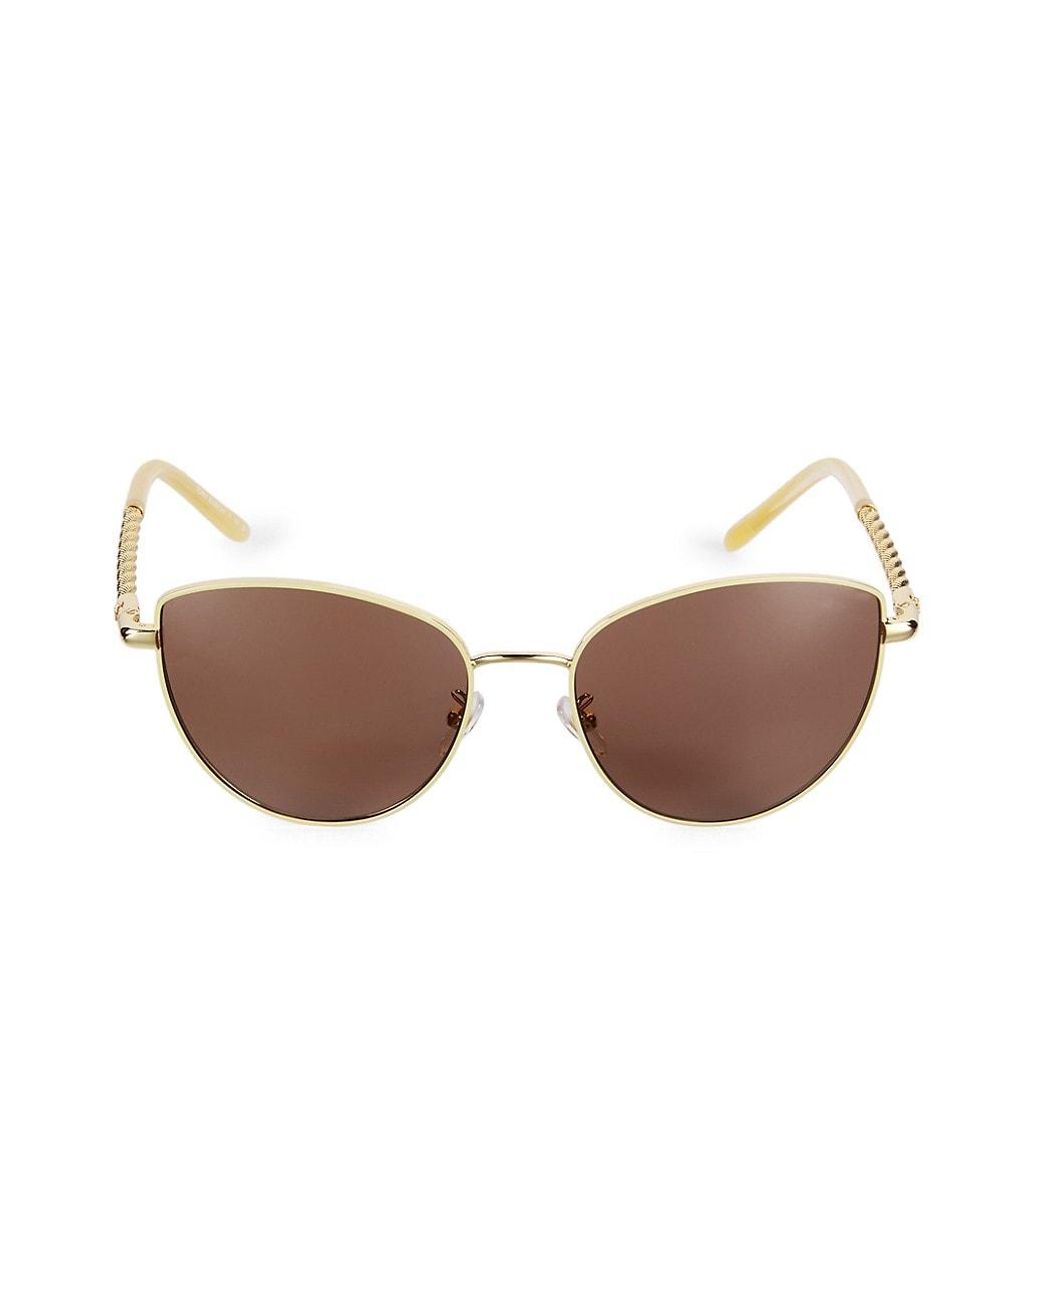 Tory Burch 56mm Cat-eye Sunglasses in Brown | Lyst